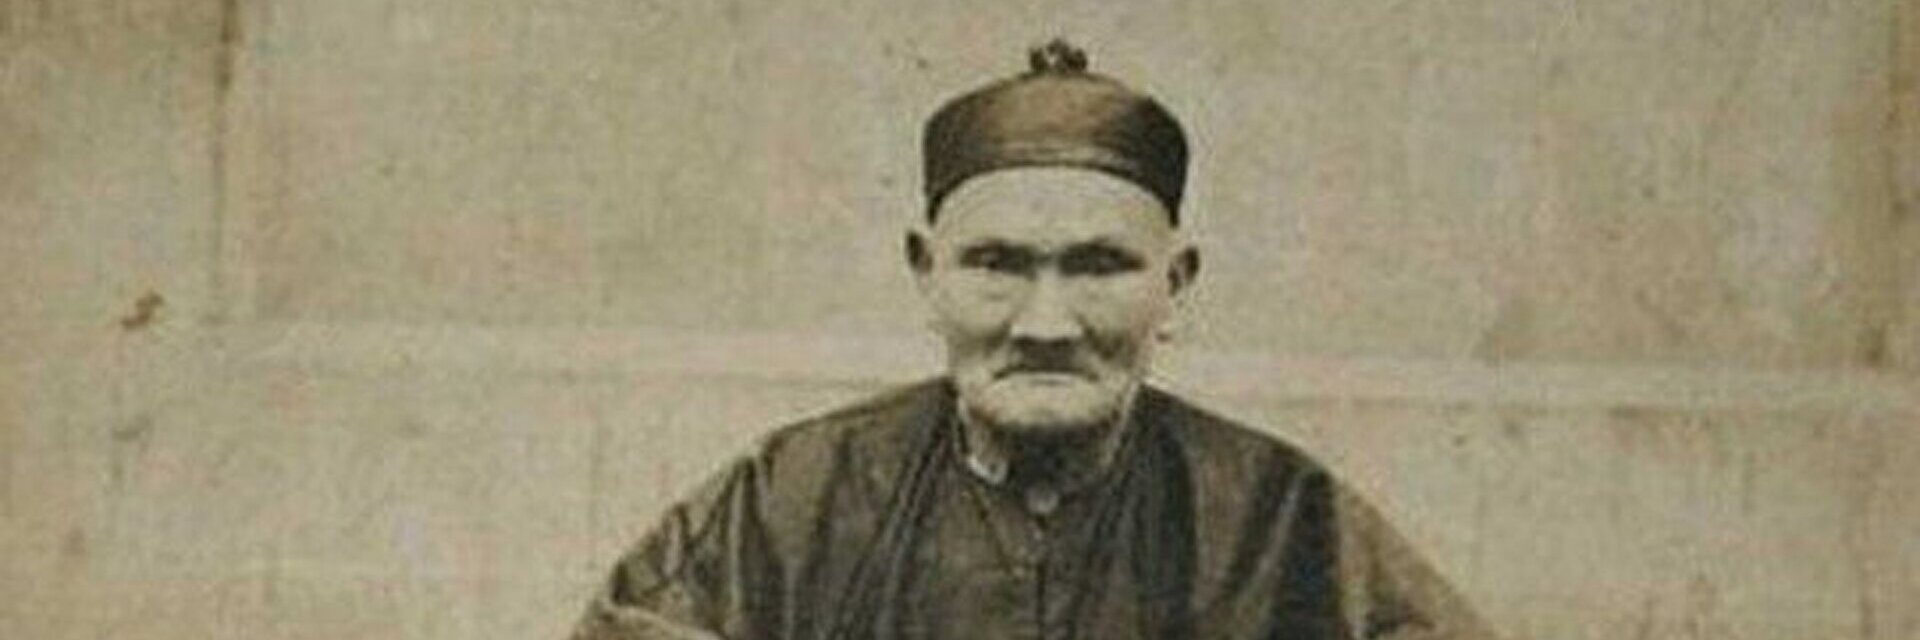 600 лет жили. Ли Цинъюнь (1677—1933). Ли Цинъюнь долгожитель. Ли Чинг-Юн долгожитель. Ли Цинъюнь 256 лет.